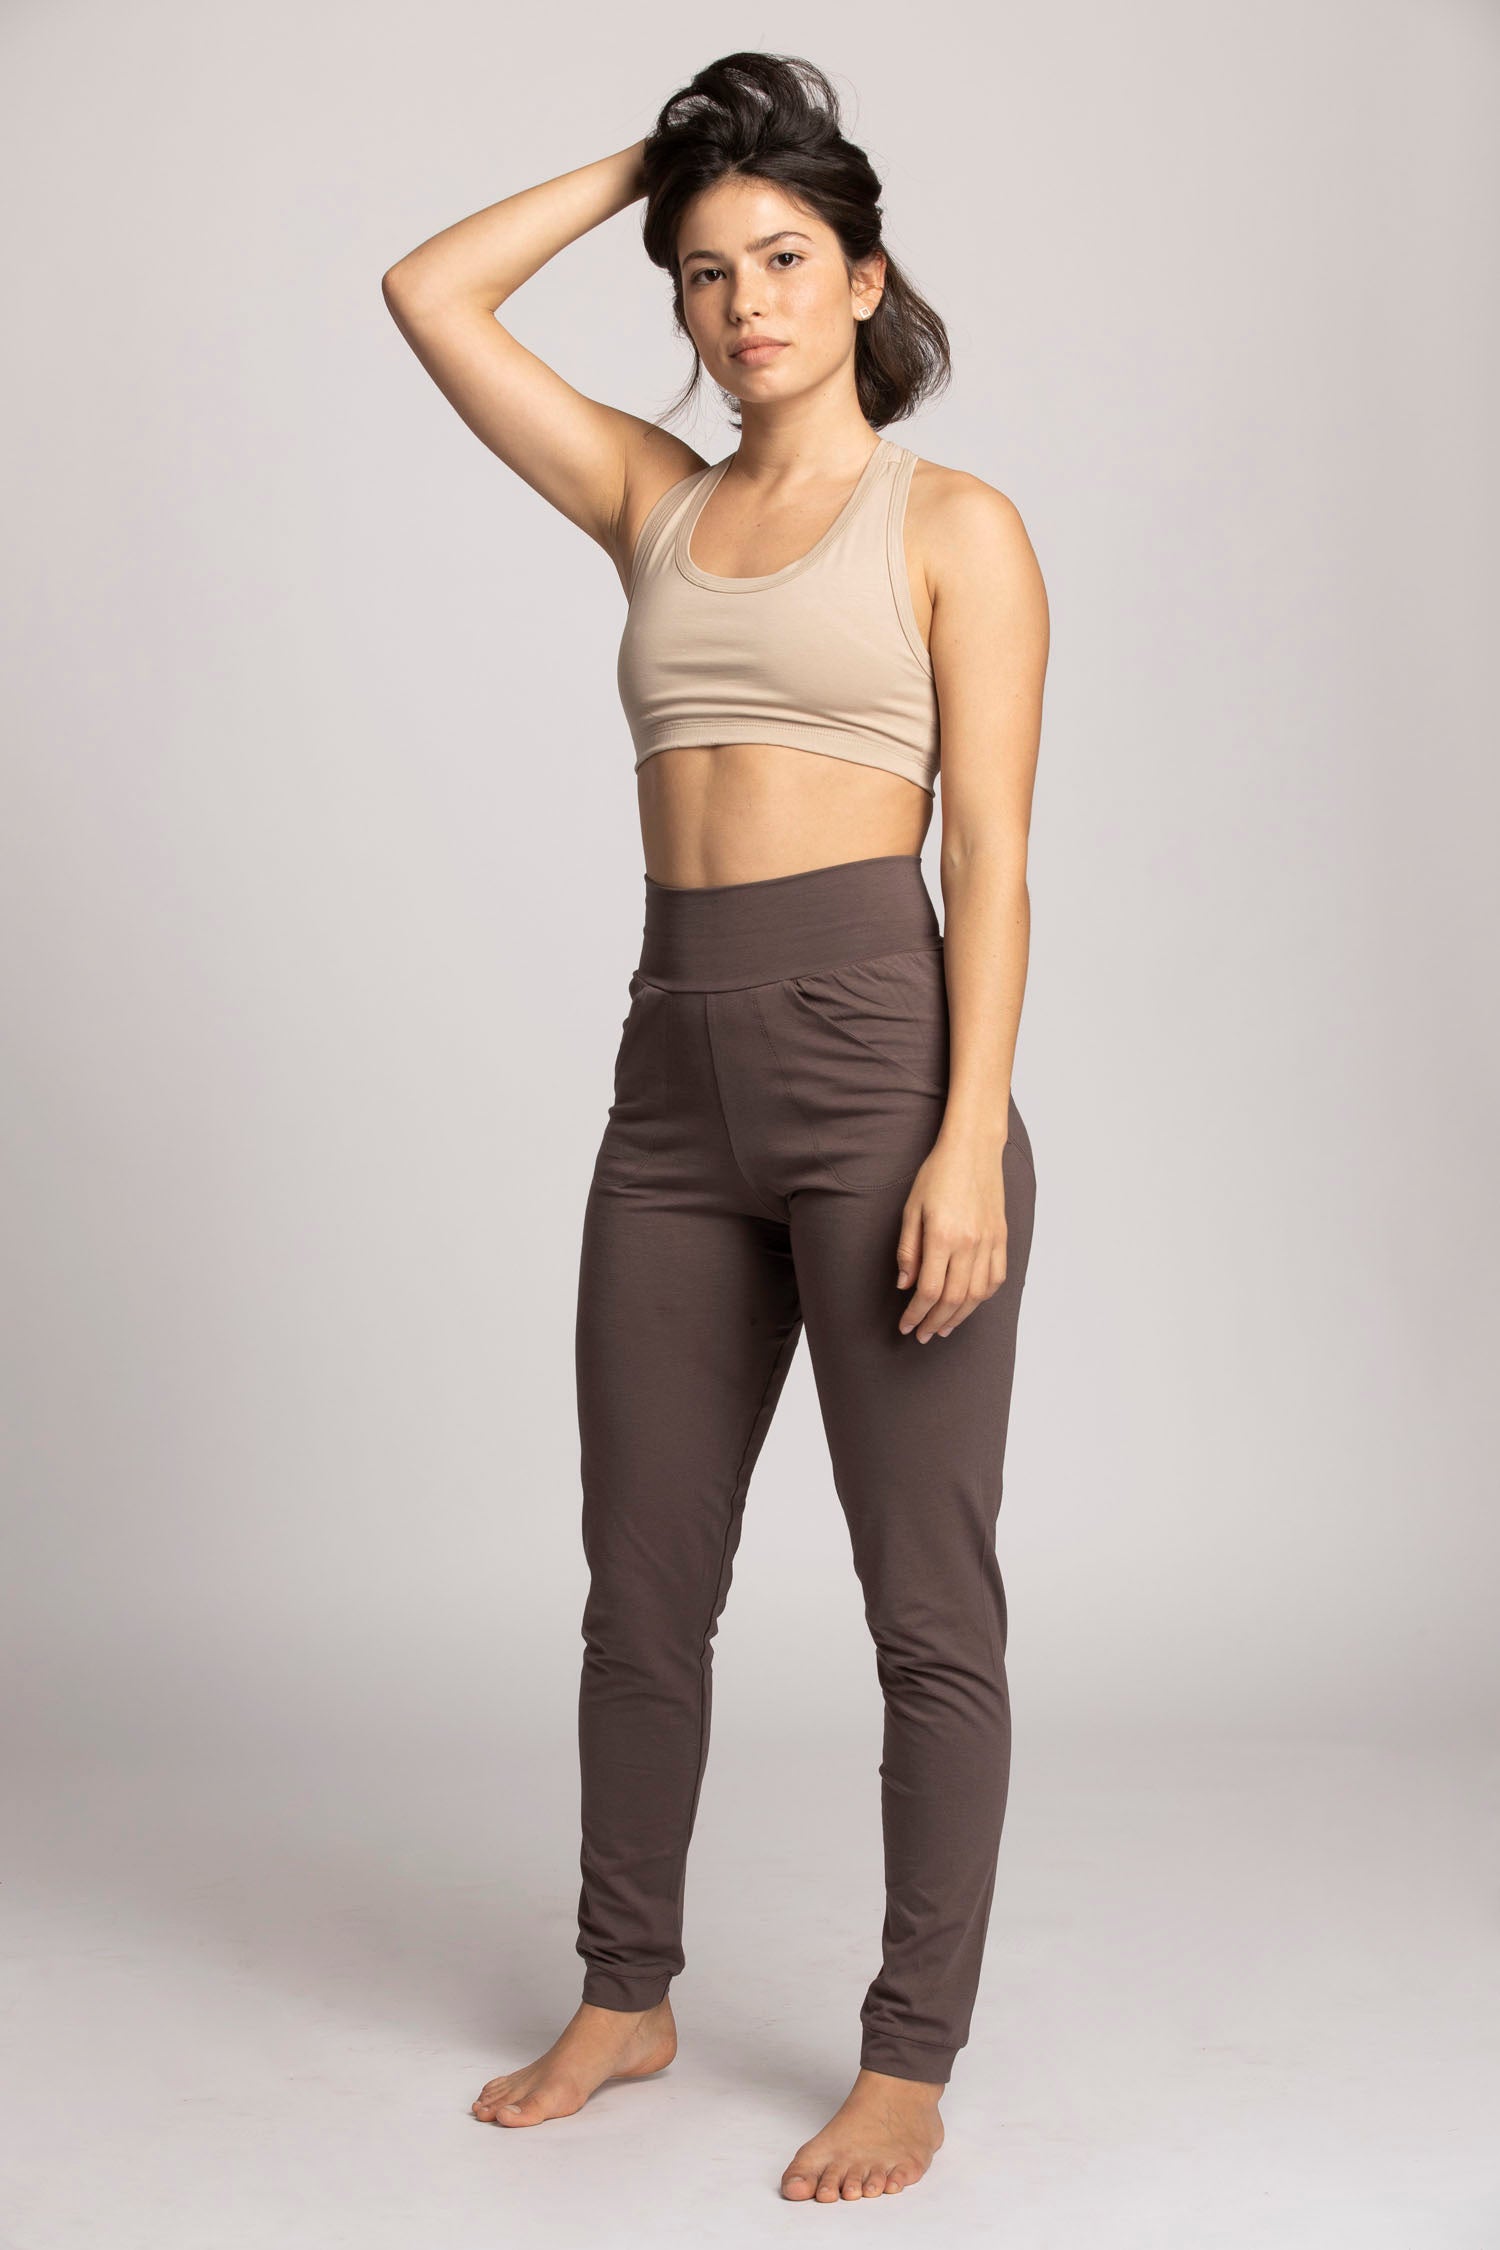 Yoga Pants, Yoga Clothing, Workout Clothes